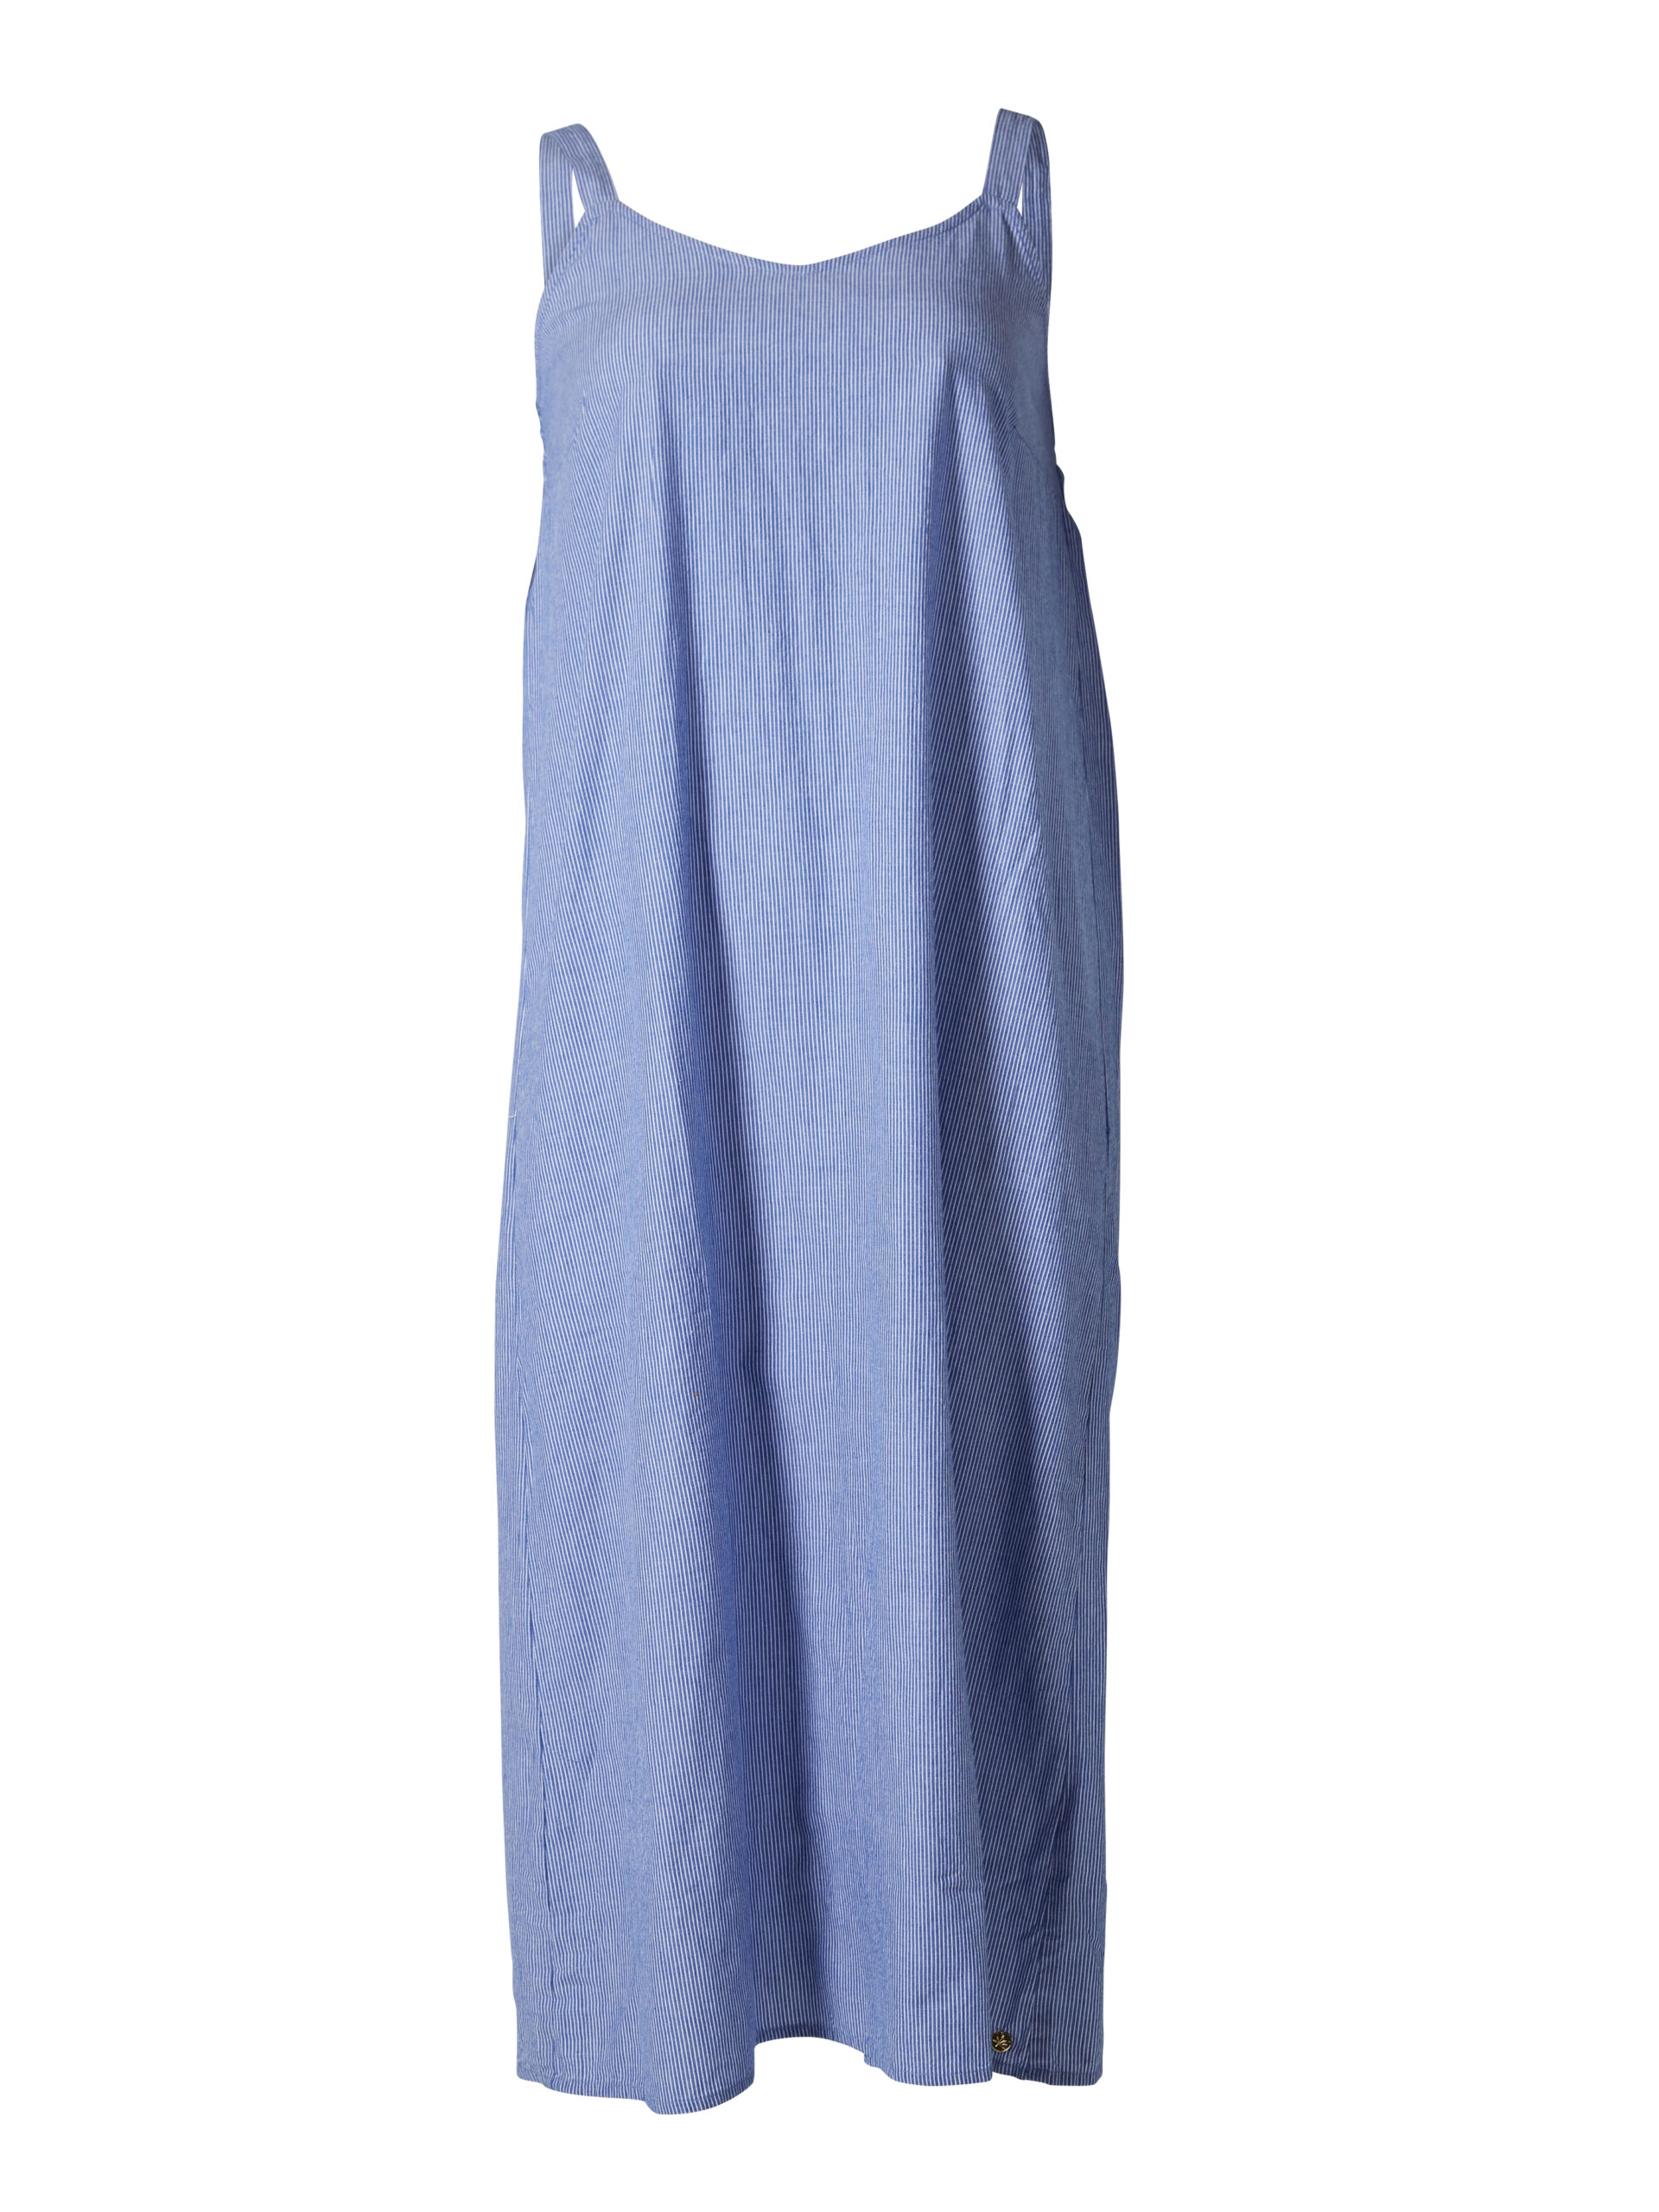 224-1223 - 467 Blue Stripe - Egypt kjole Zoey